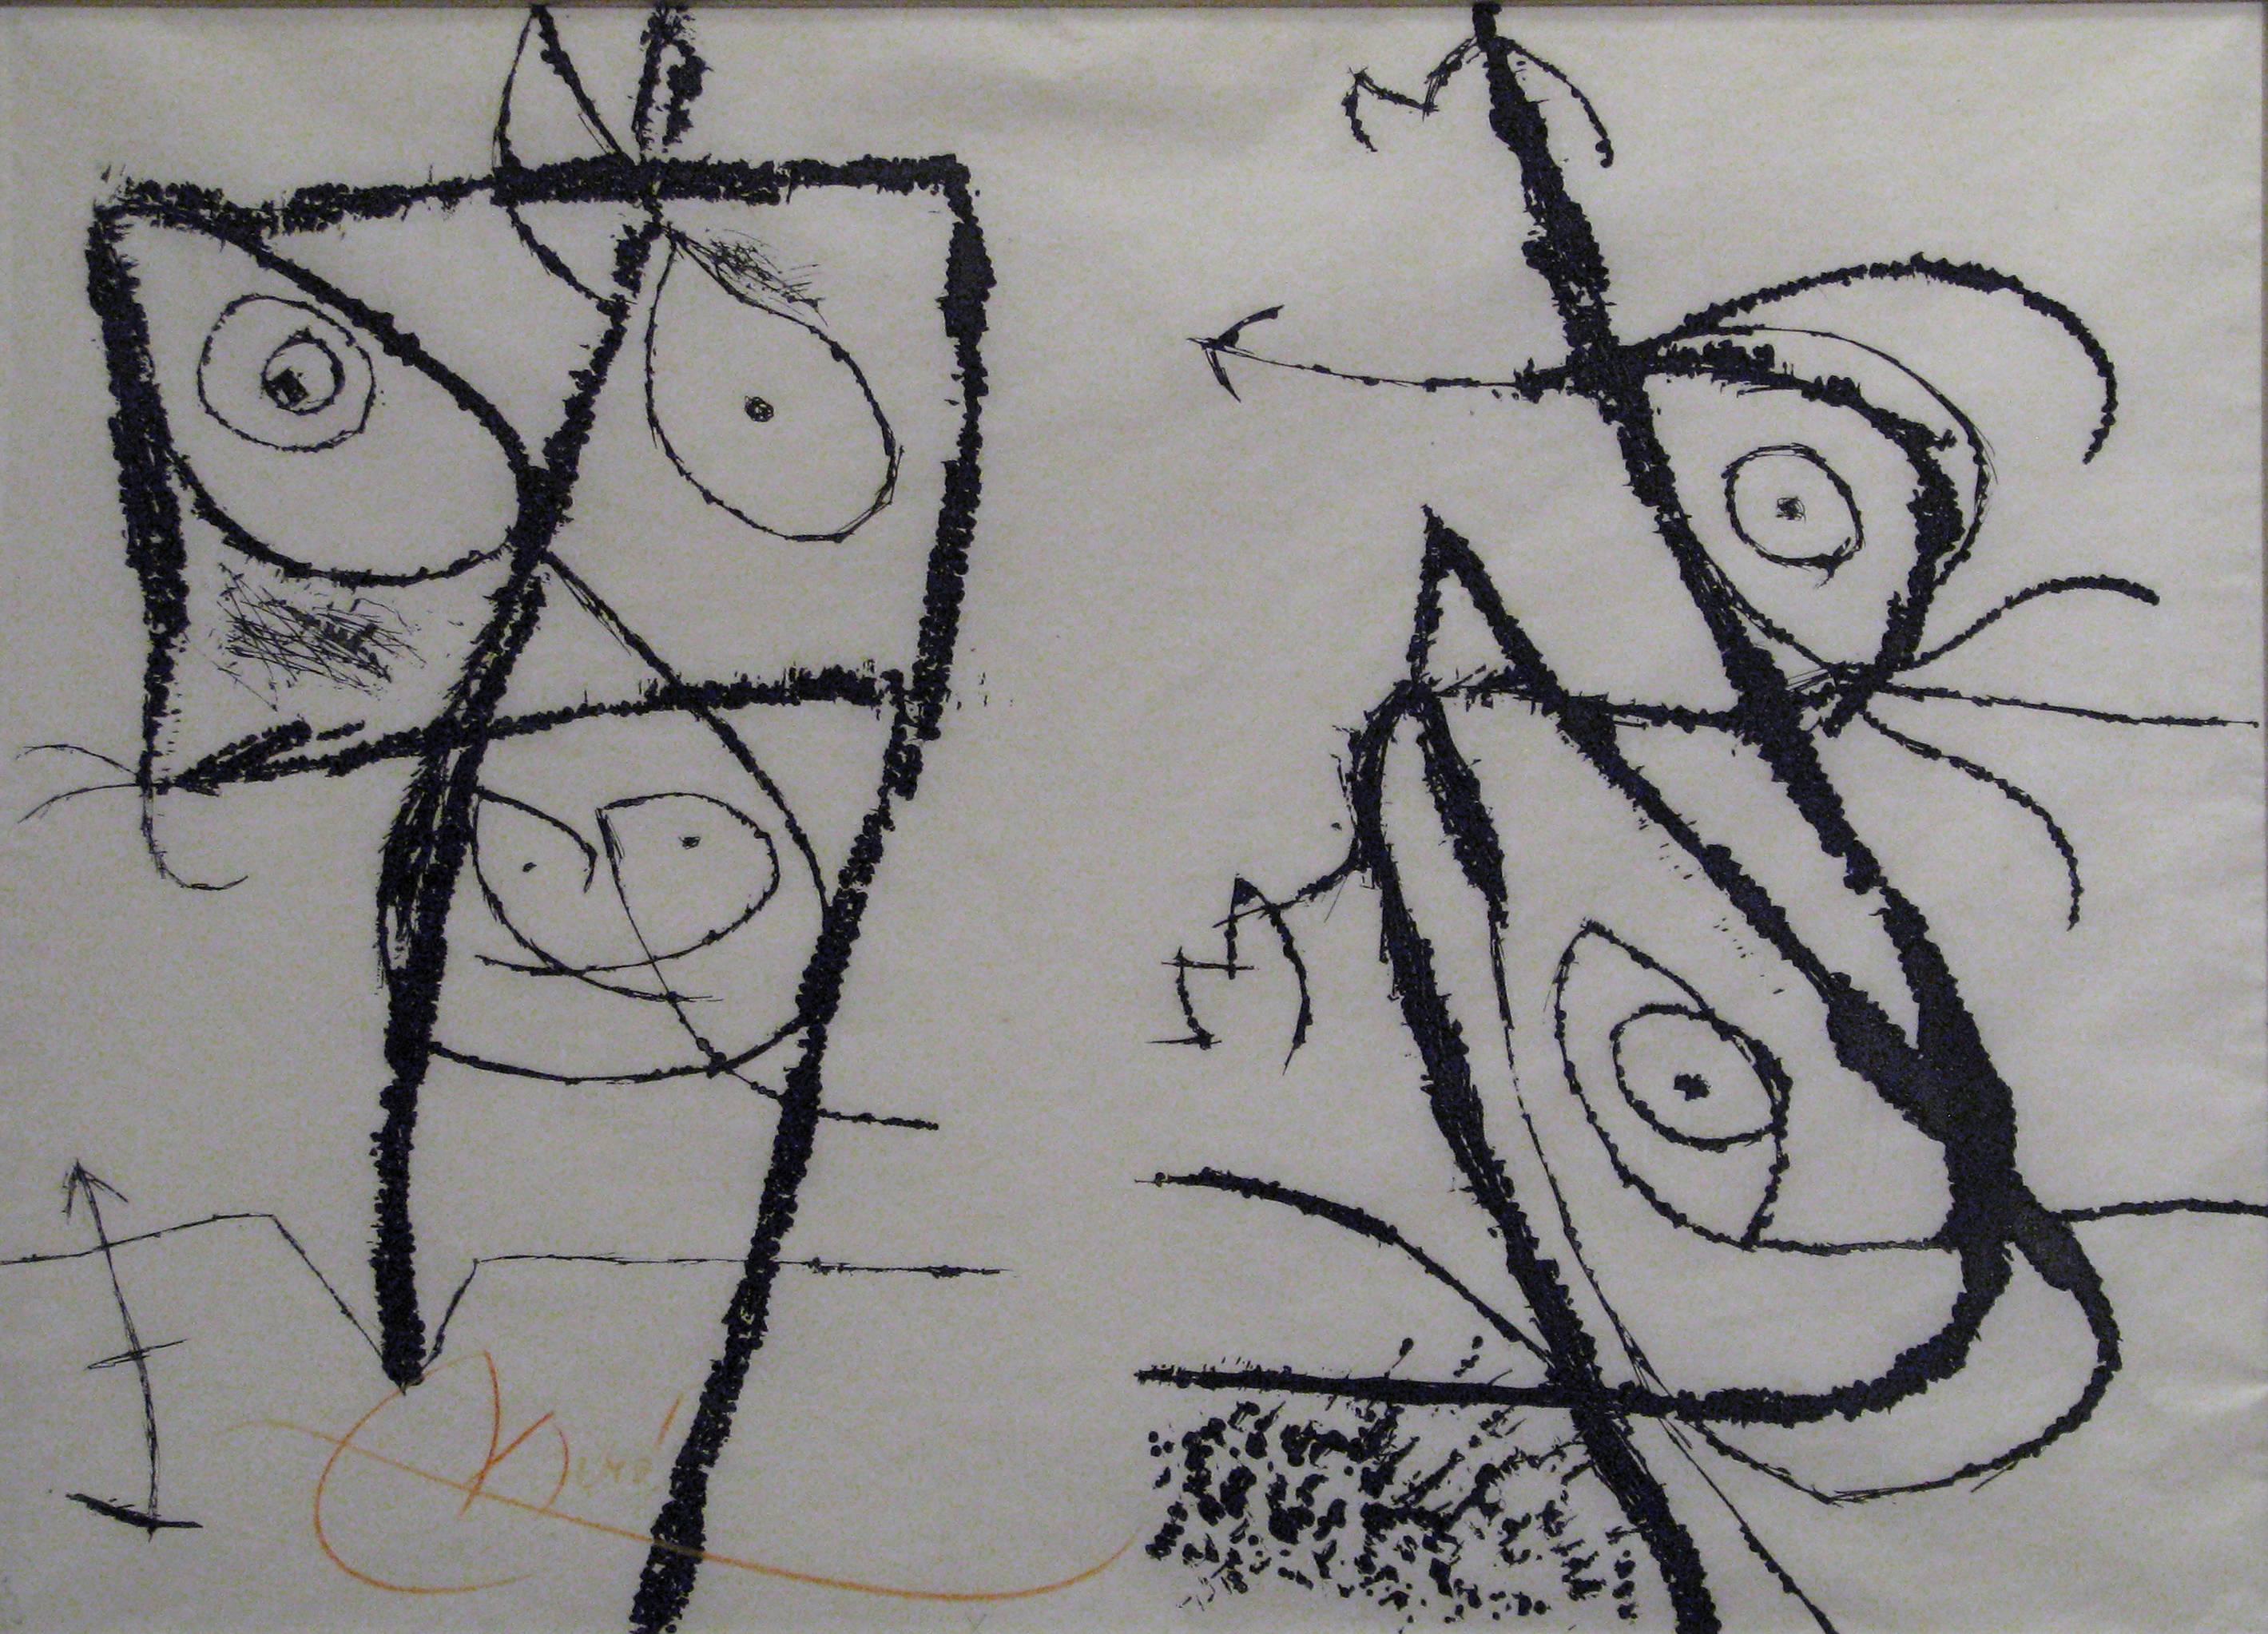 Le courtesan grotesque - Print by Joan Miró